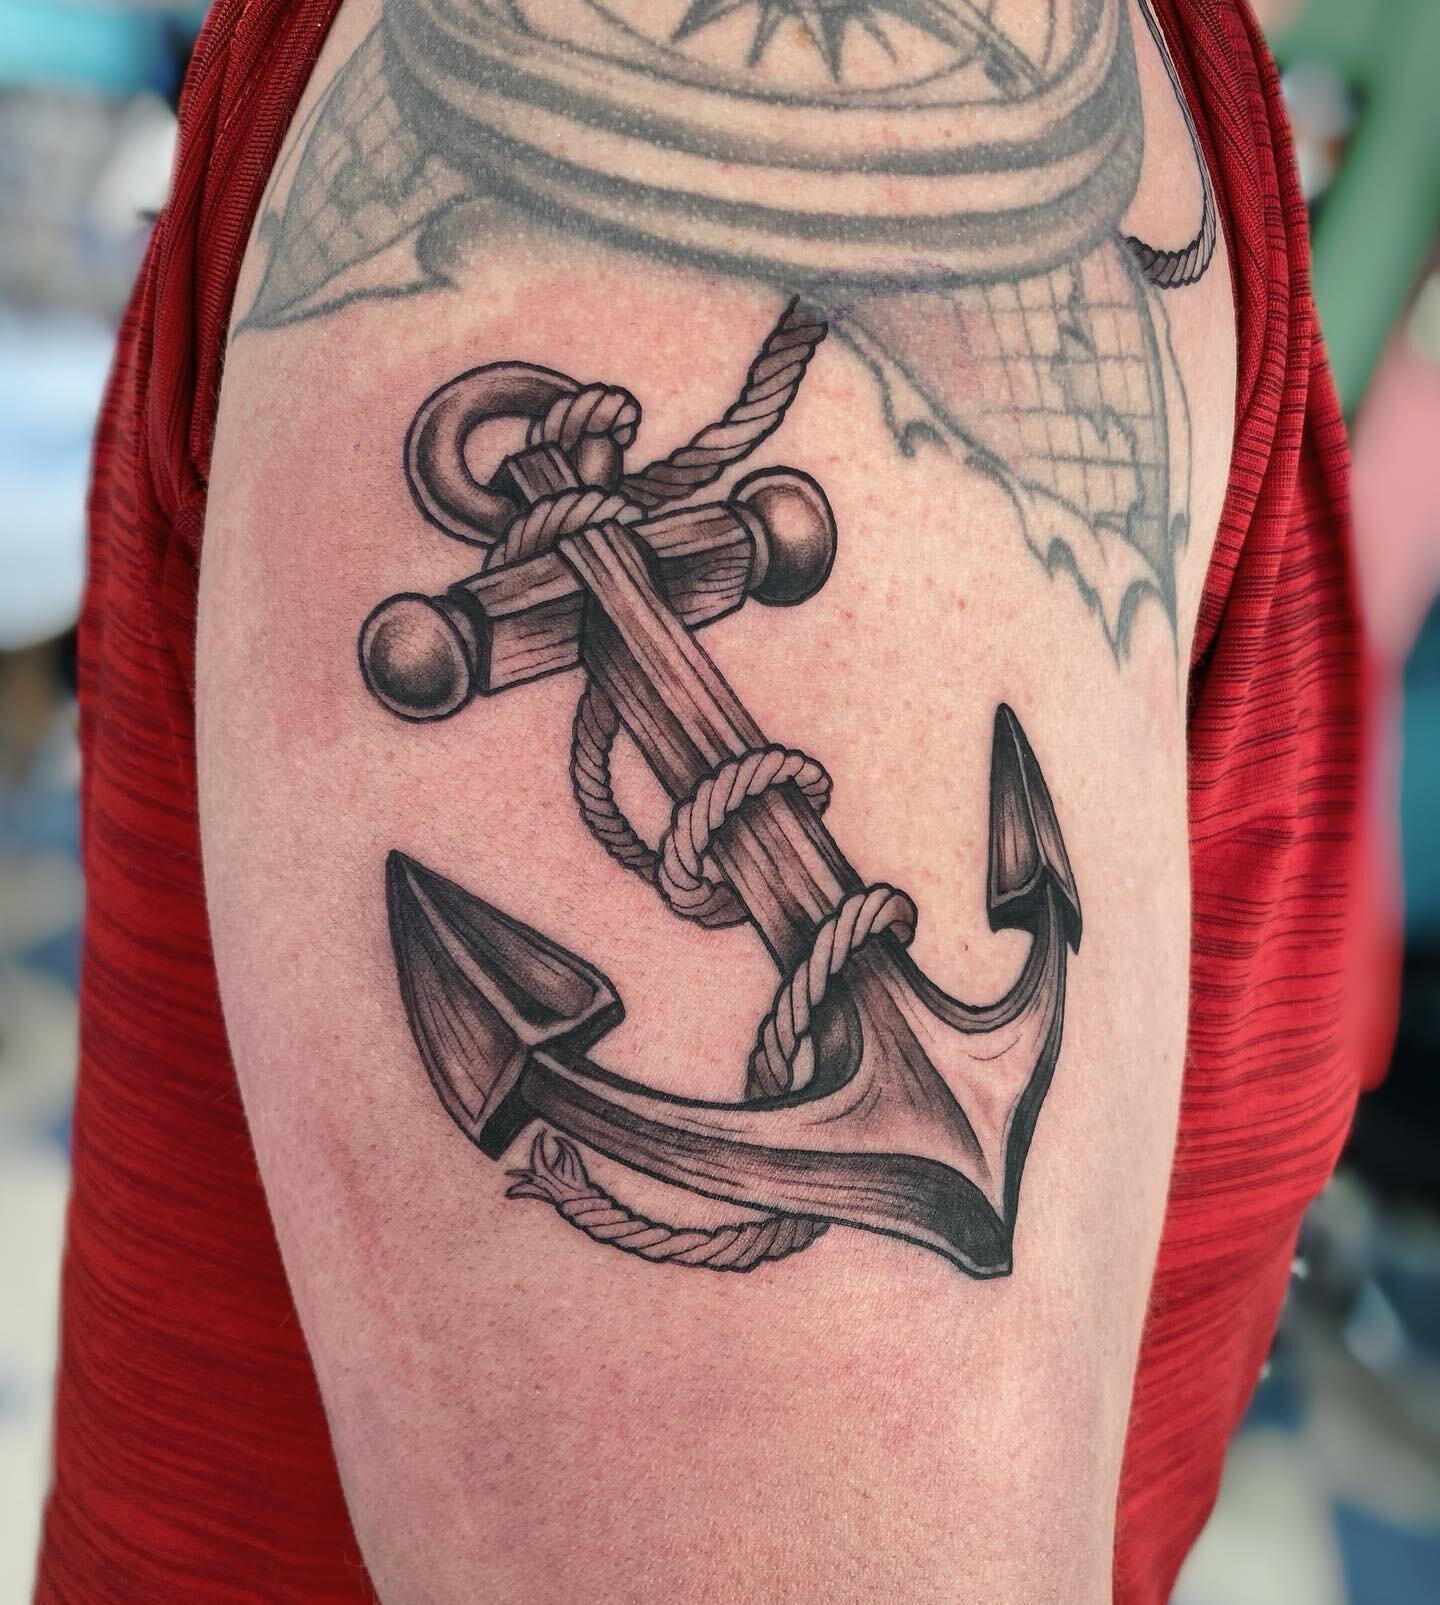 Nautical tattoos are always fun 🌊 Cape cod vibes! 

#nautical #tattoo #tattooshop #massachusetts #ink #anchor #anchortattoo